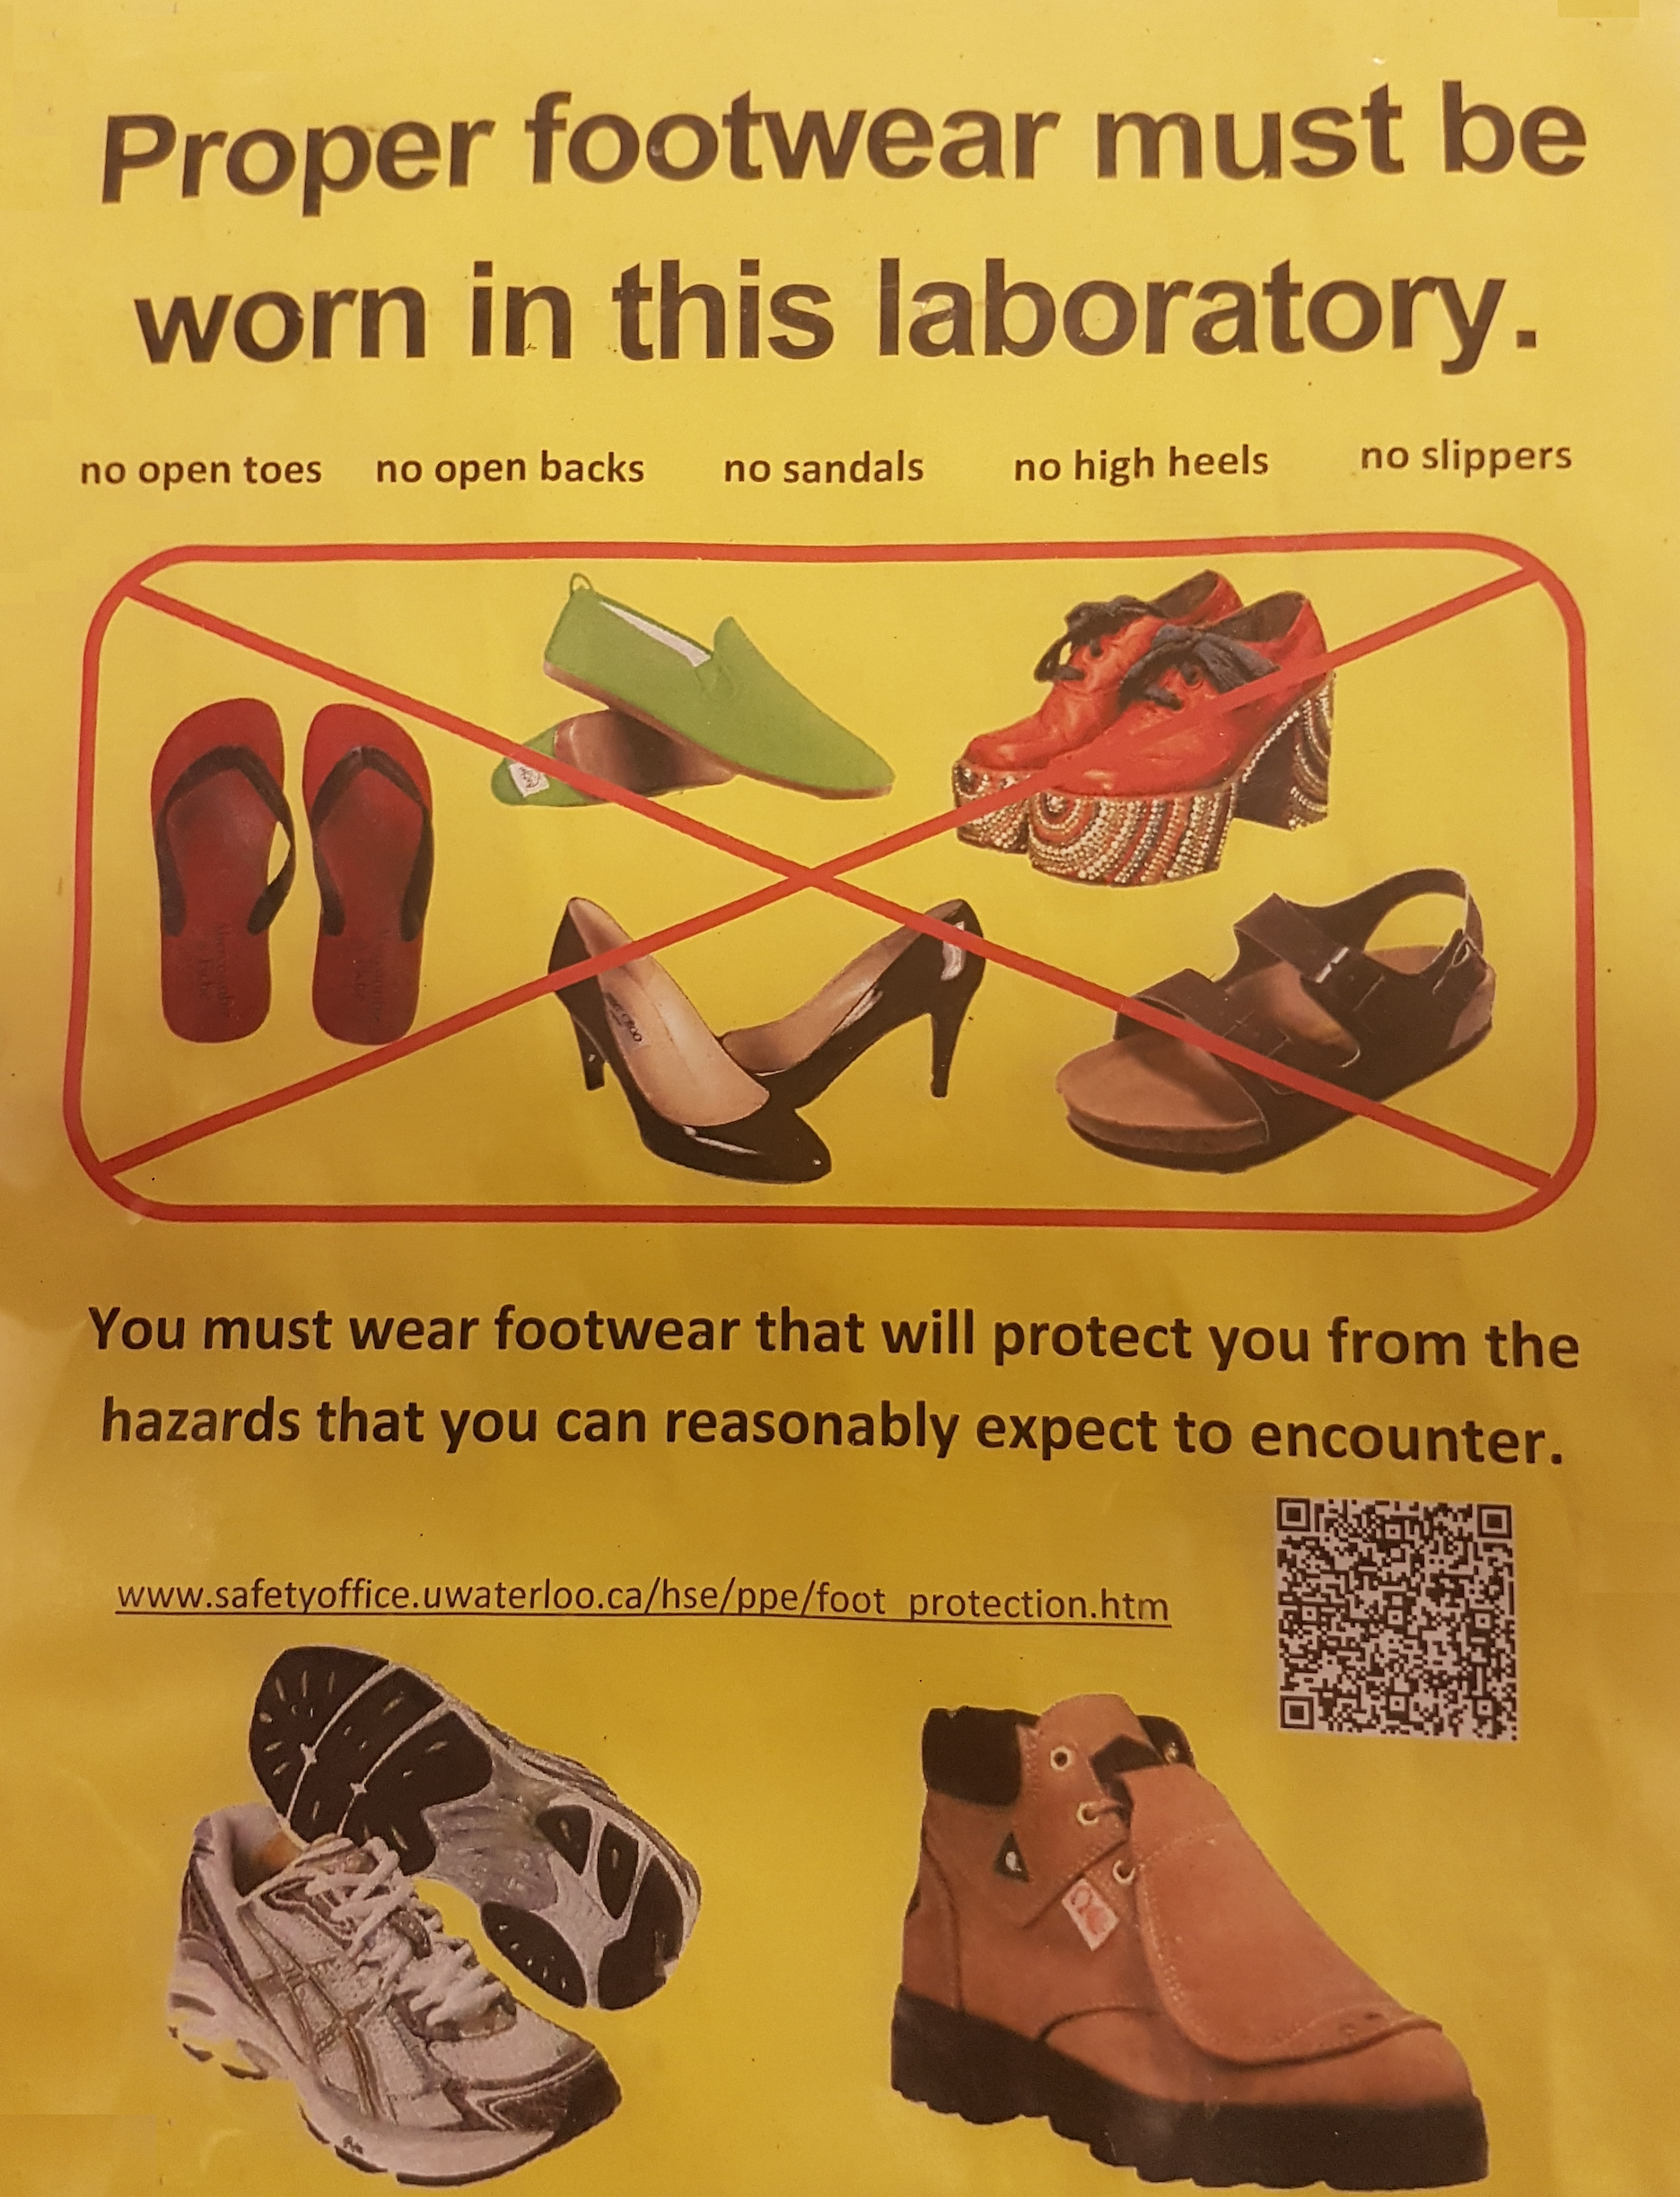 Proper footwear must be worn in this laboratory